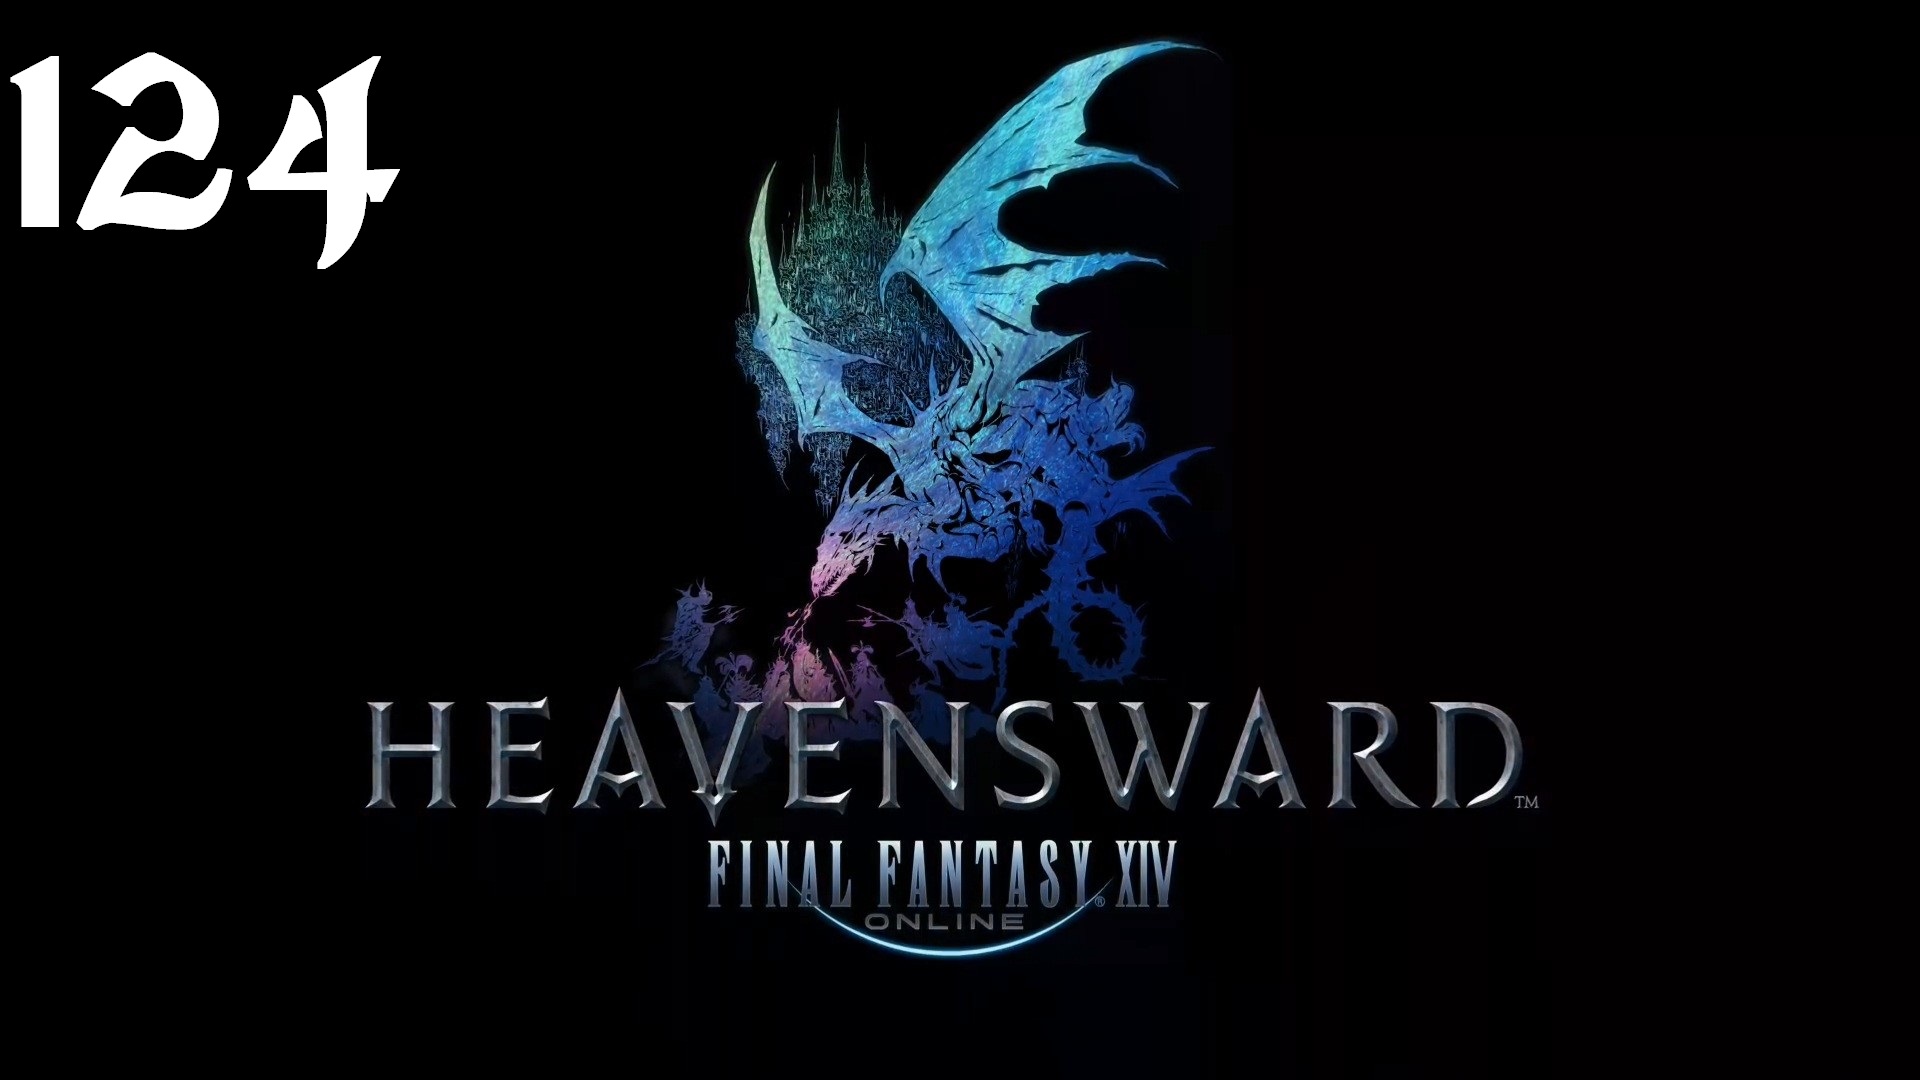 Final Fantasy XIV | Heavensward | Прохождение | PC | Часть 124 | Firmament и Coil of Bahamut